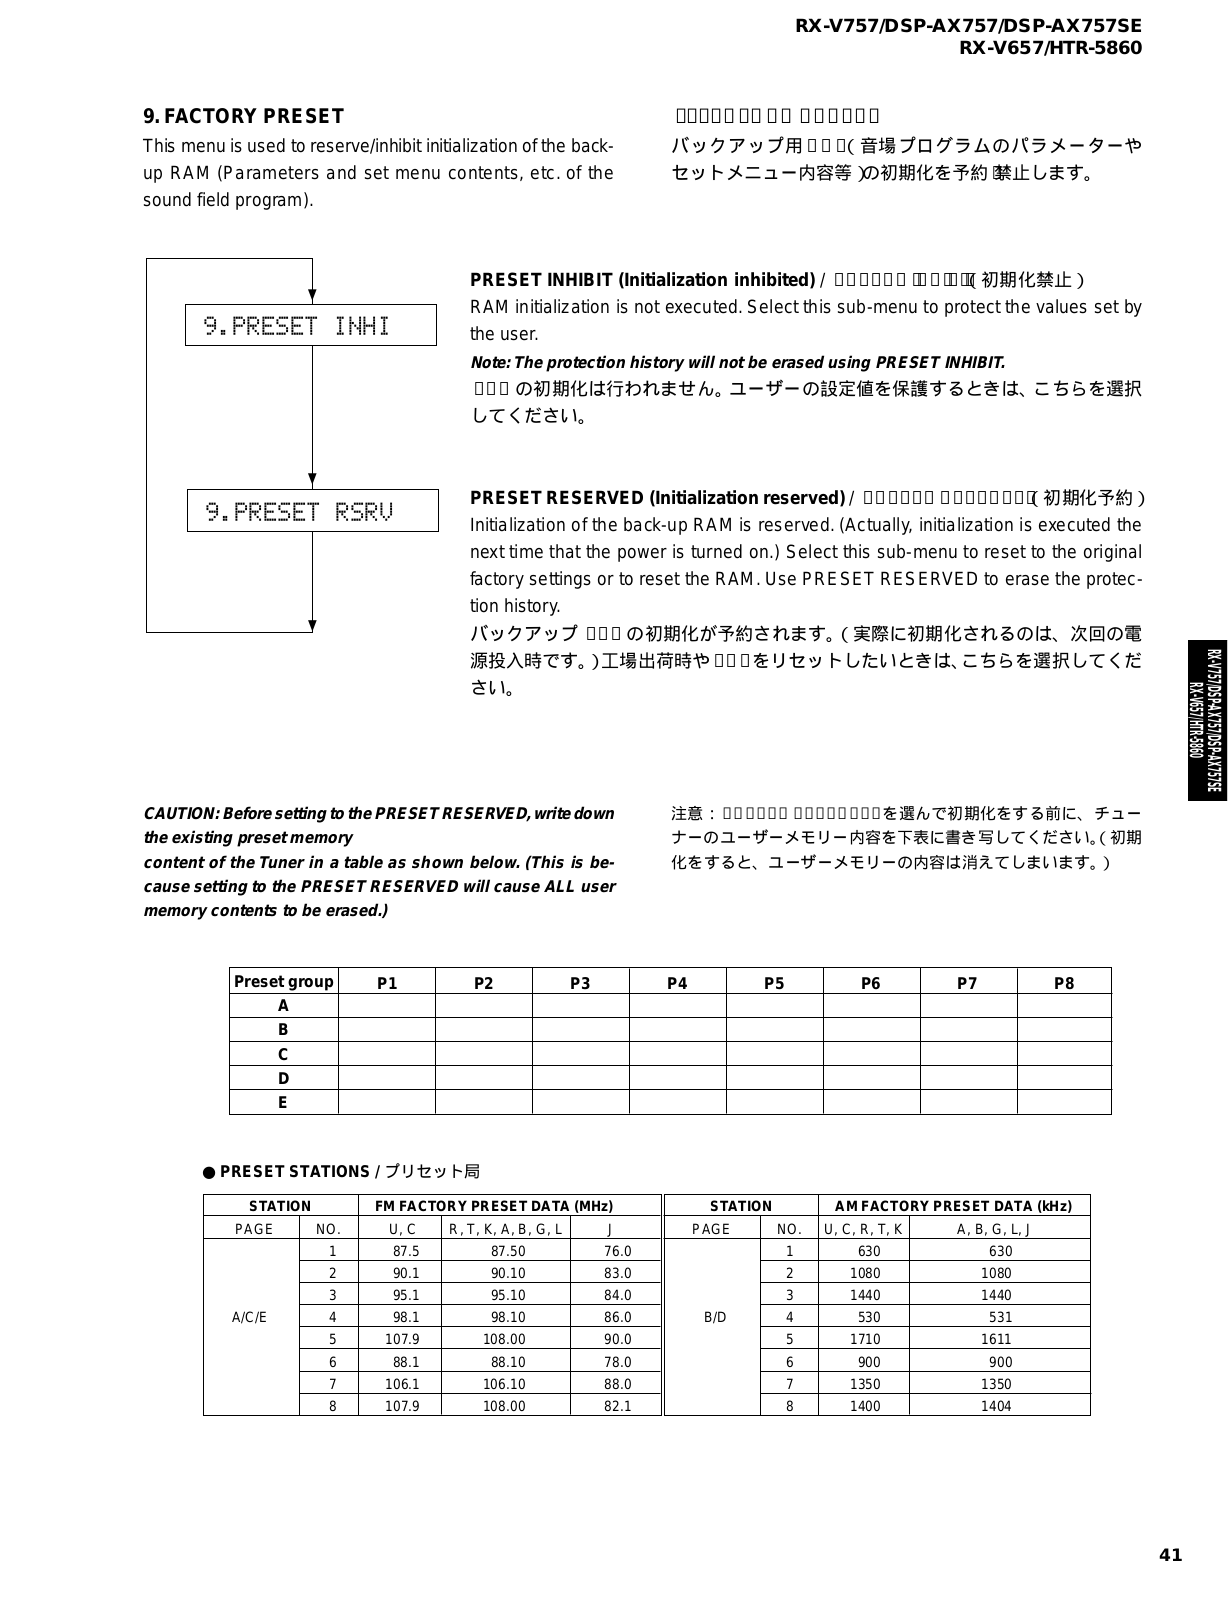 Yamaha RX-V757, DSP-AX757, RX-V657, HTR-5860 Service manual